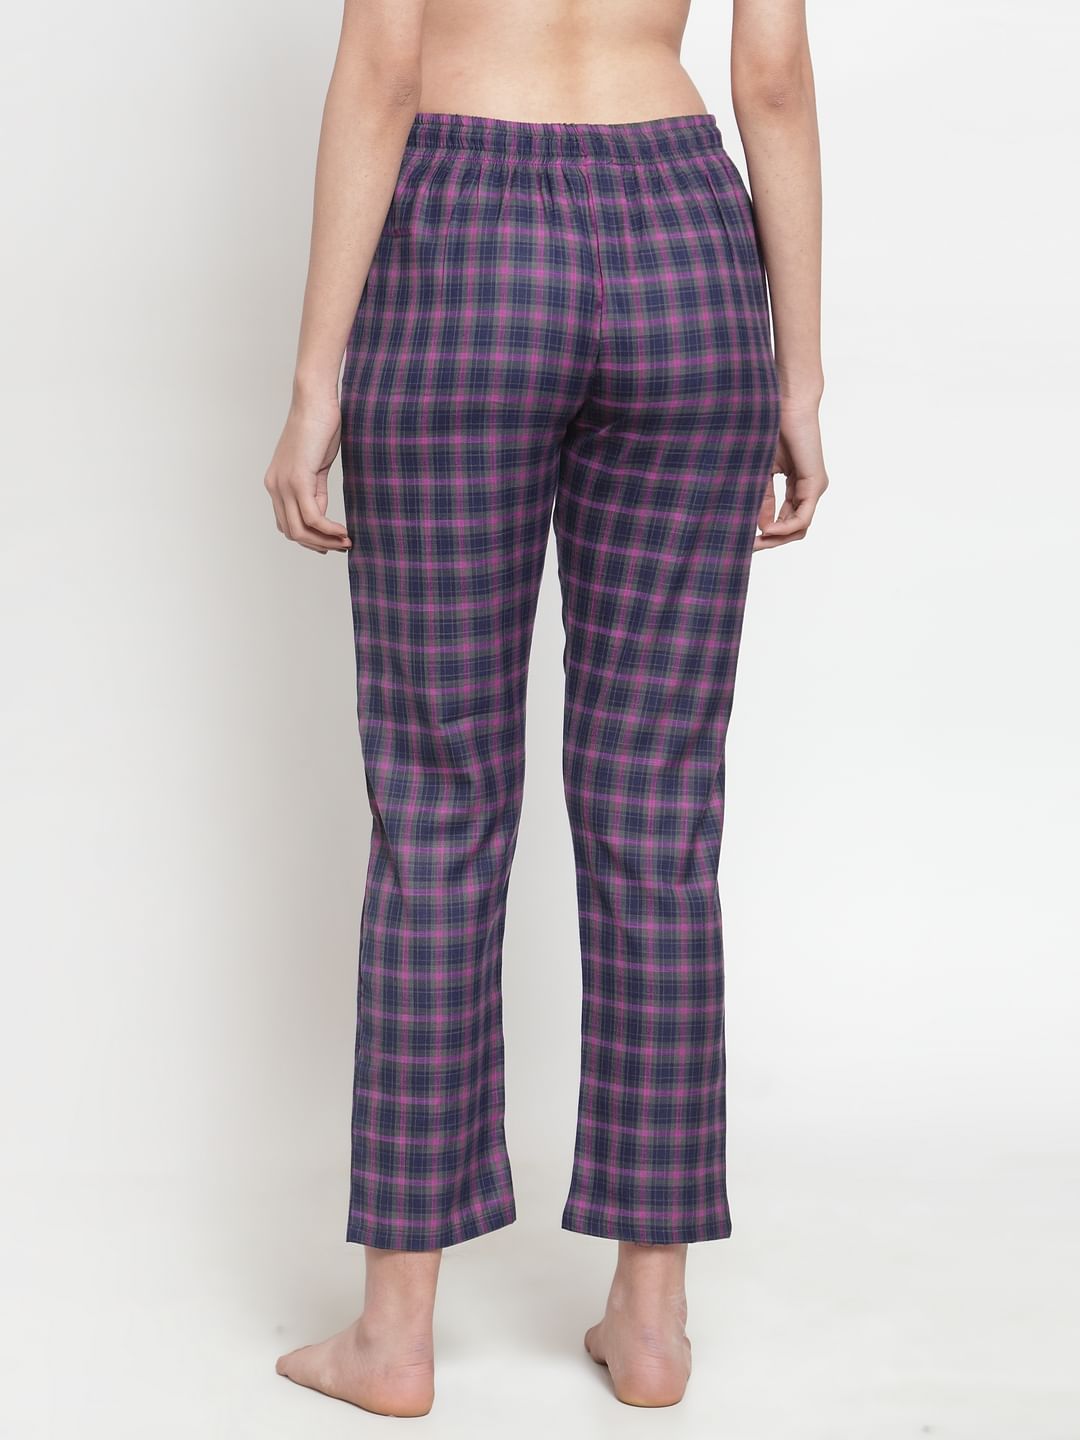 cotton Purple checkered pyjama